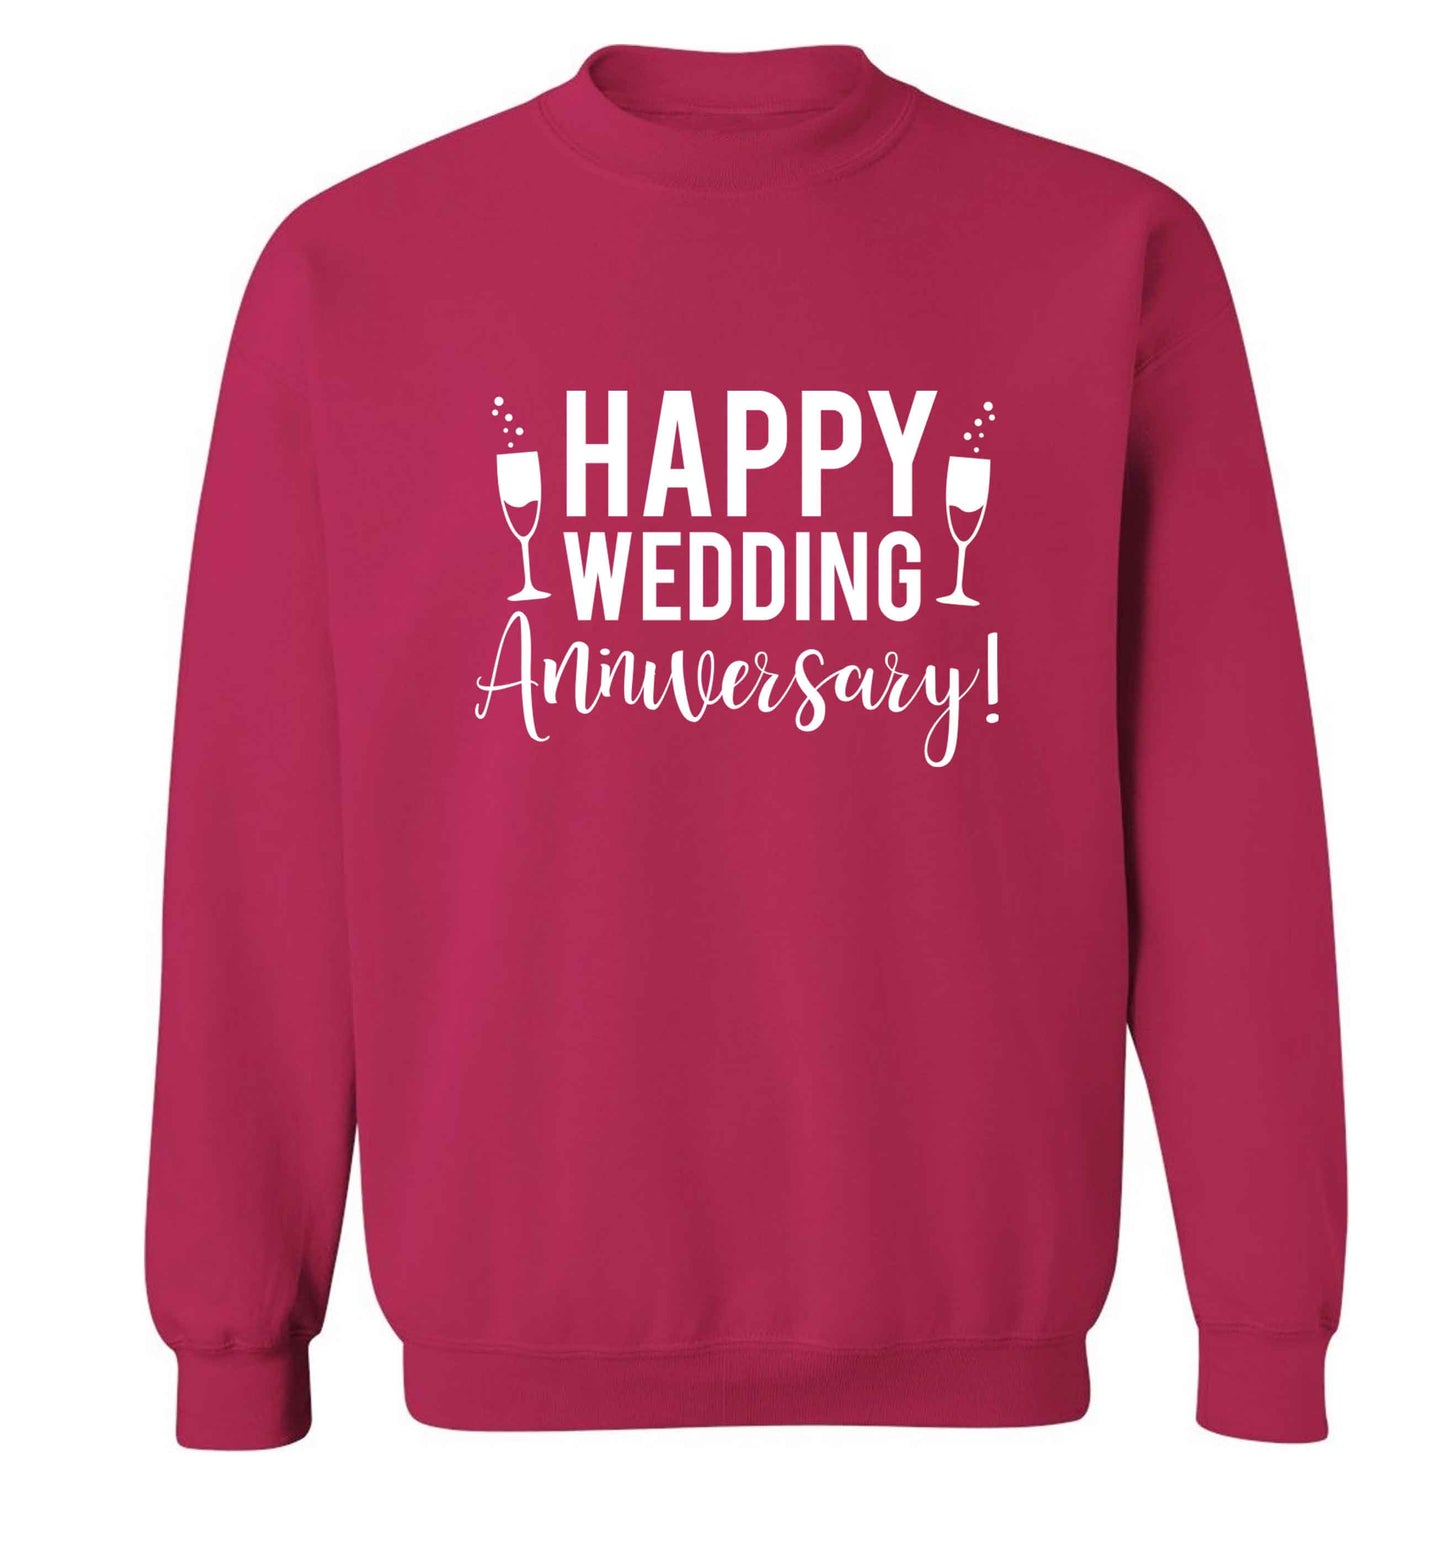 Happy wedding anniversary! adult's unisex pink sweater 2XL